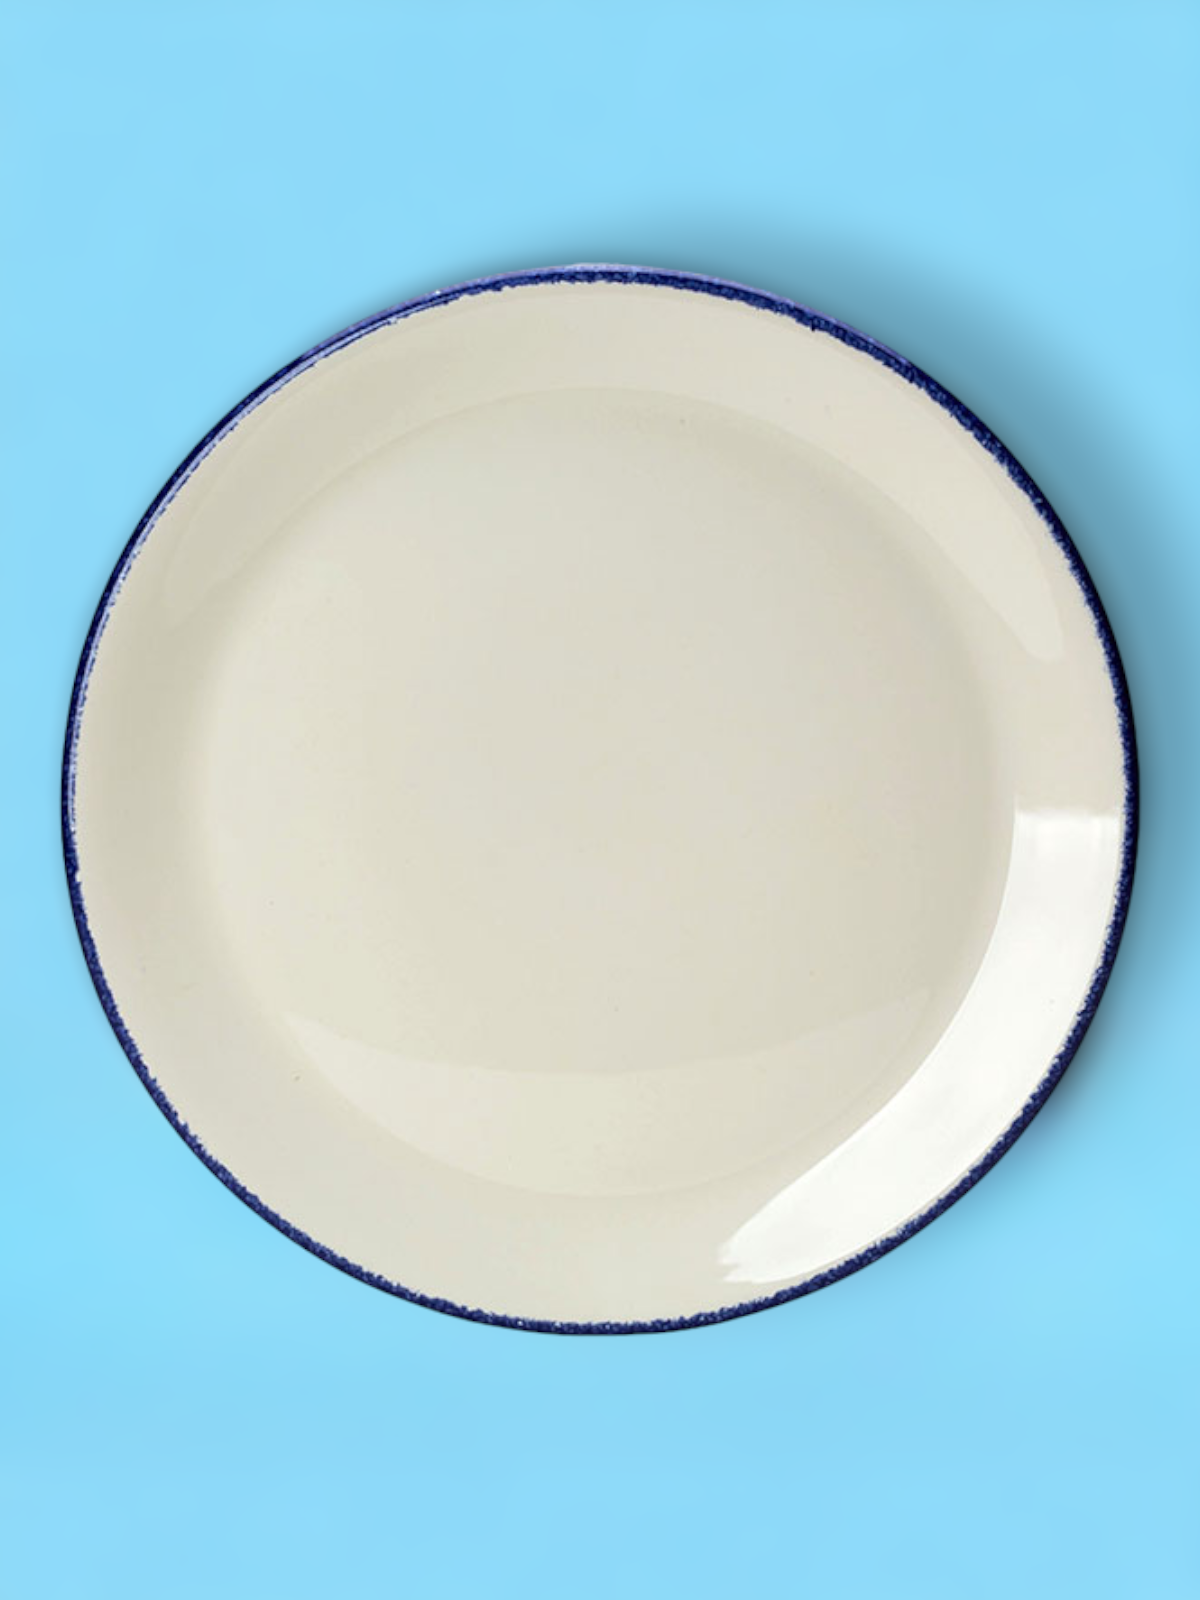 Тарелка сервировочная Steelite Blue Dapple, фарфоровая, 25 см